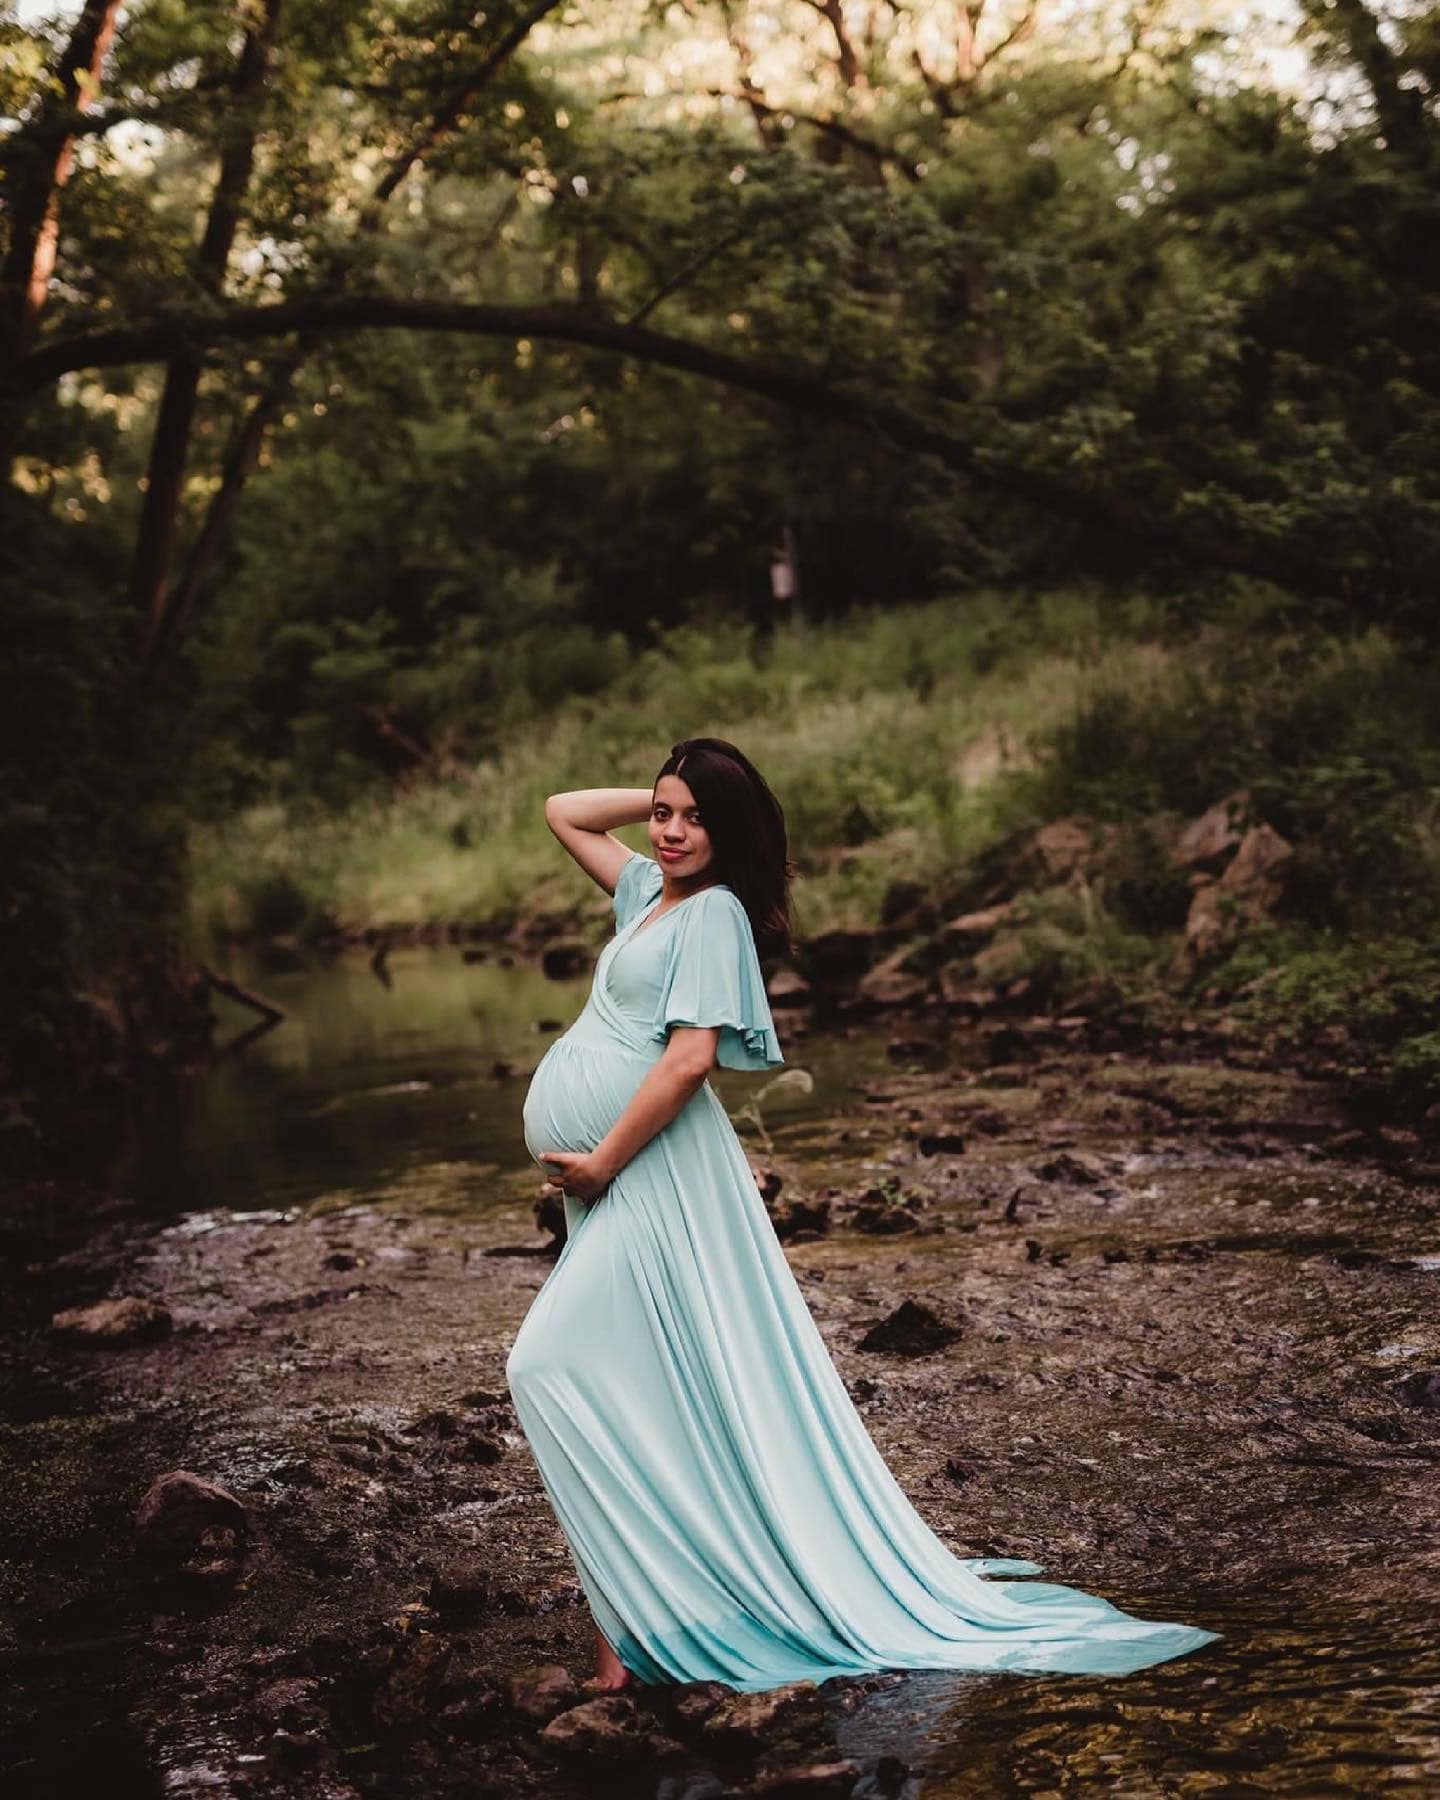 Aqua Everly Gown - maternity photoshoot dress